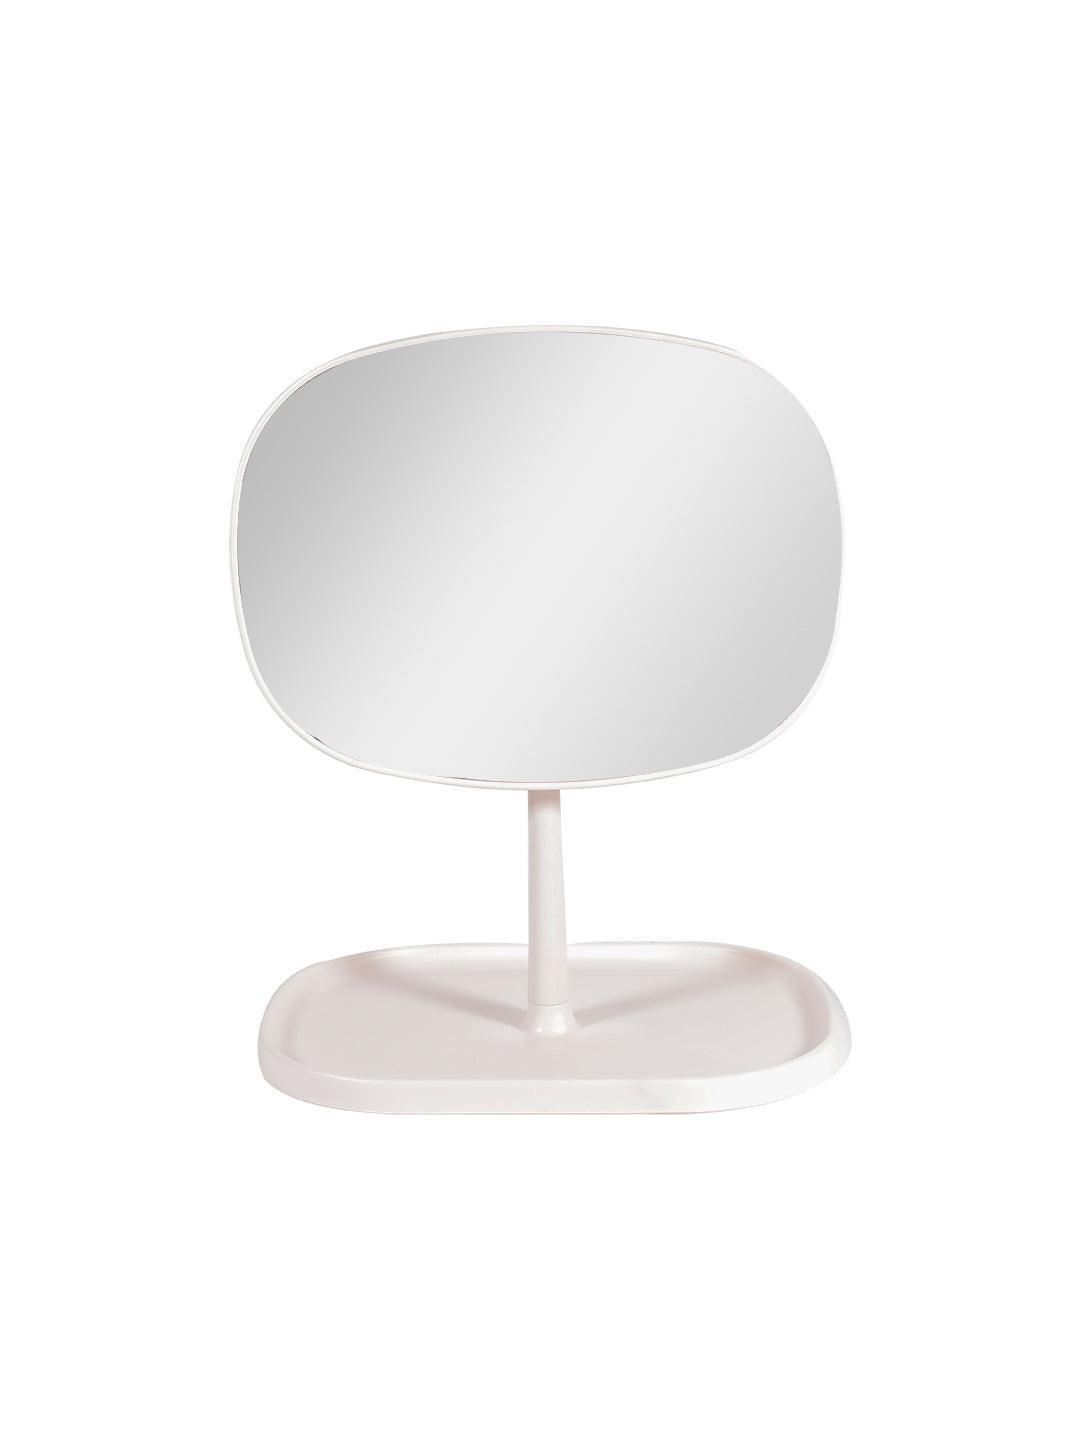 Market99 Table Top Light Up Make-Up Mirror - MARKET 99